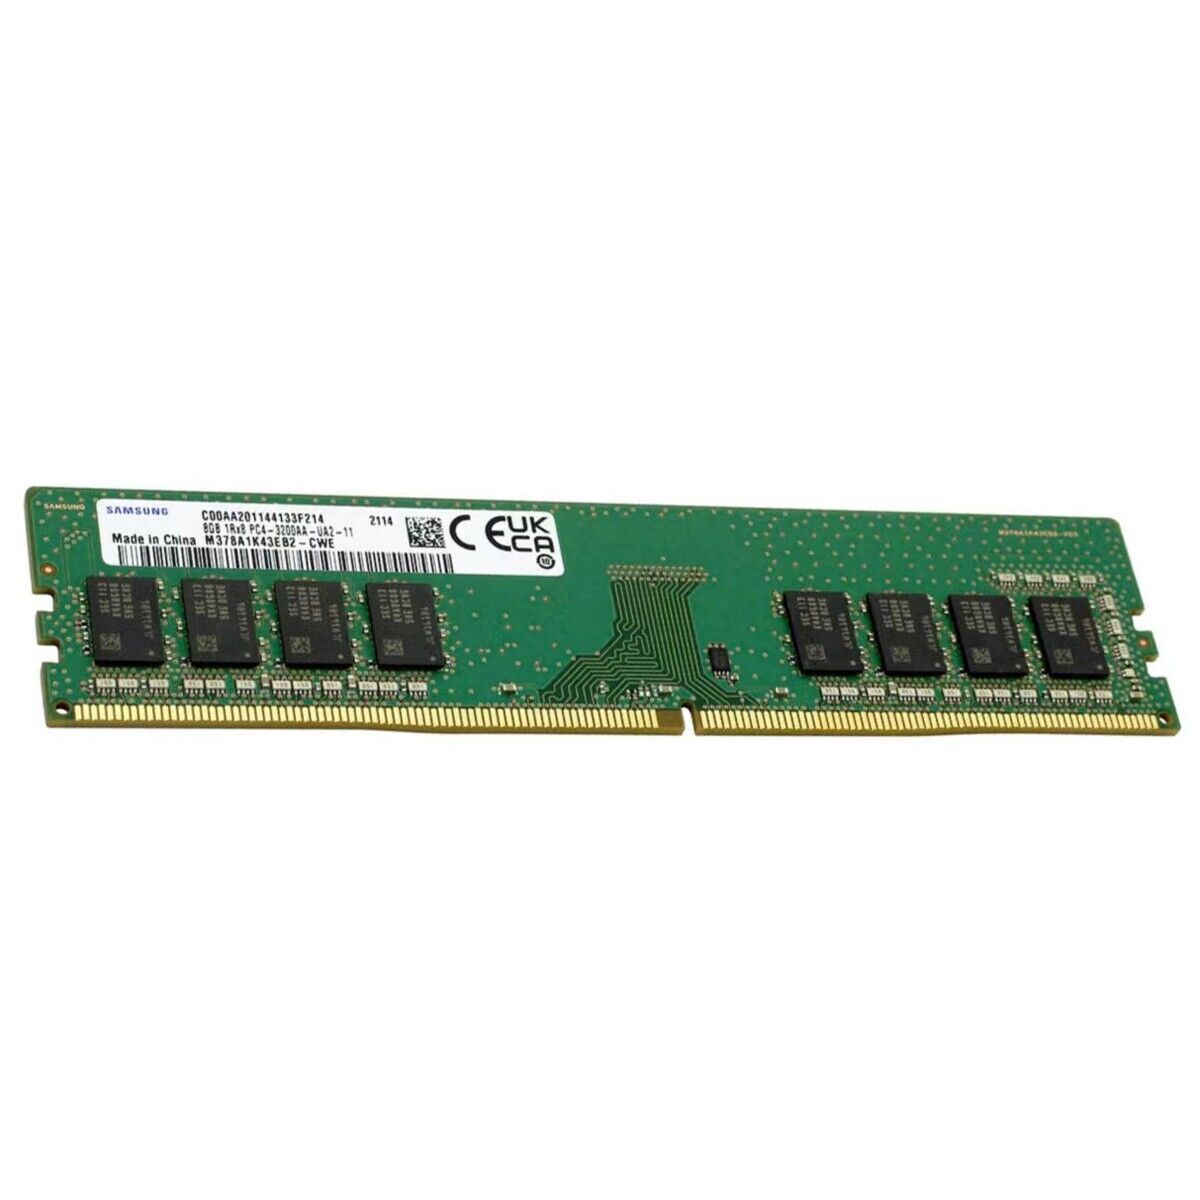 New Samsung  8GB DDR4 3200MHz PC4-25600 1RX8 UDIMM Memory Ram M378A1K43EB2-CWE